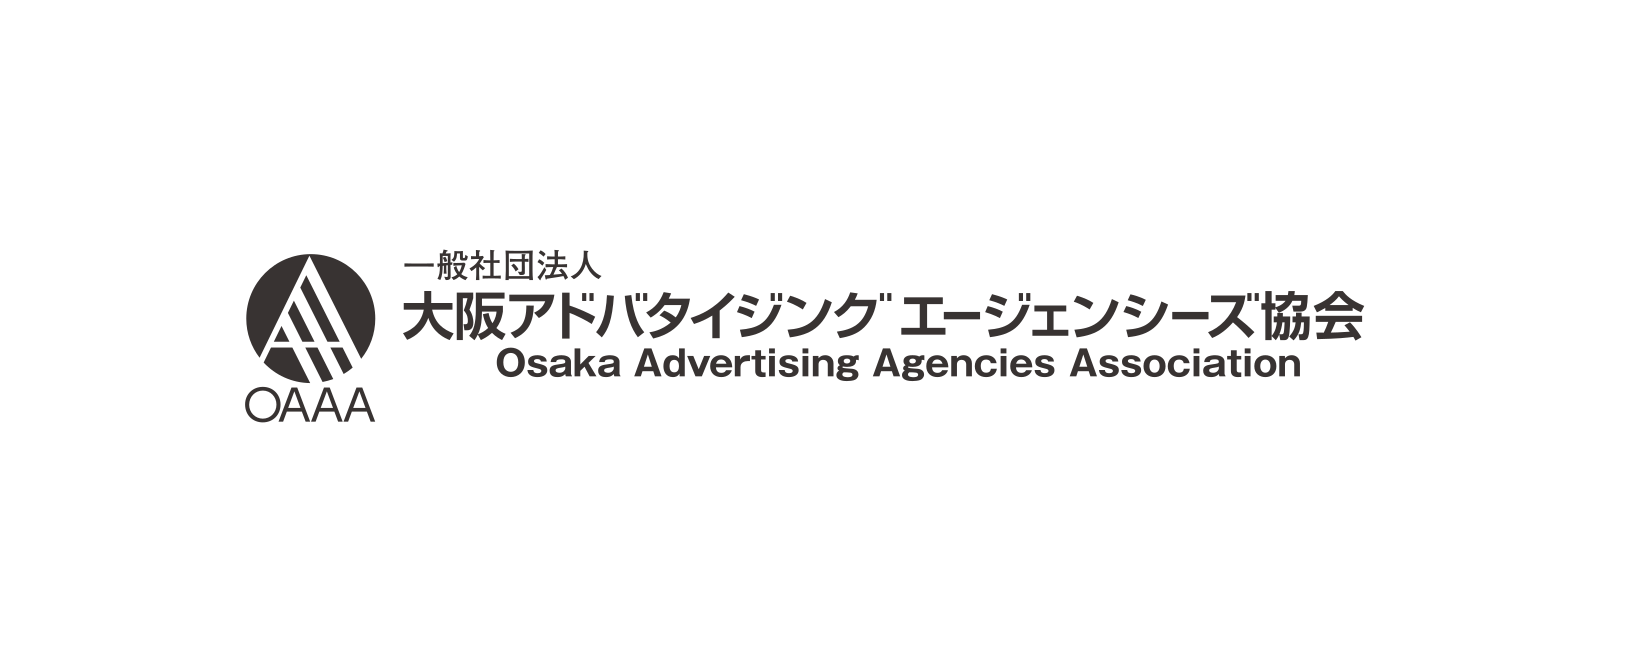 OAAA (Osaka Advertising Agencies Association)